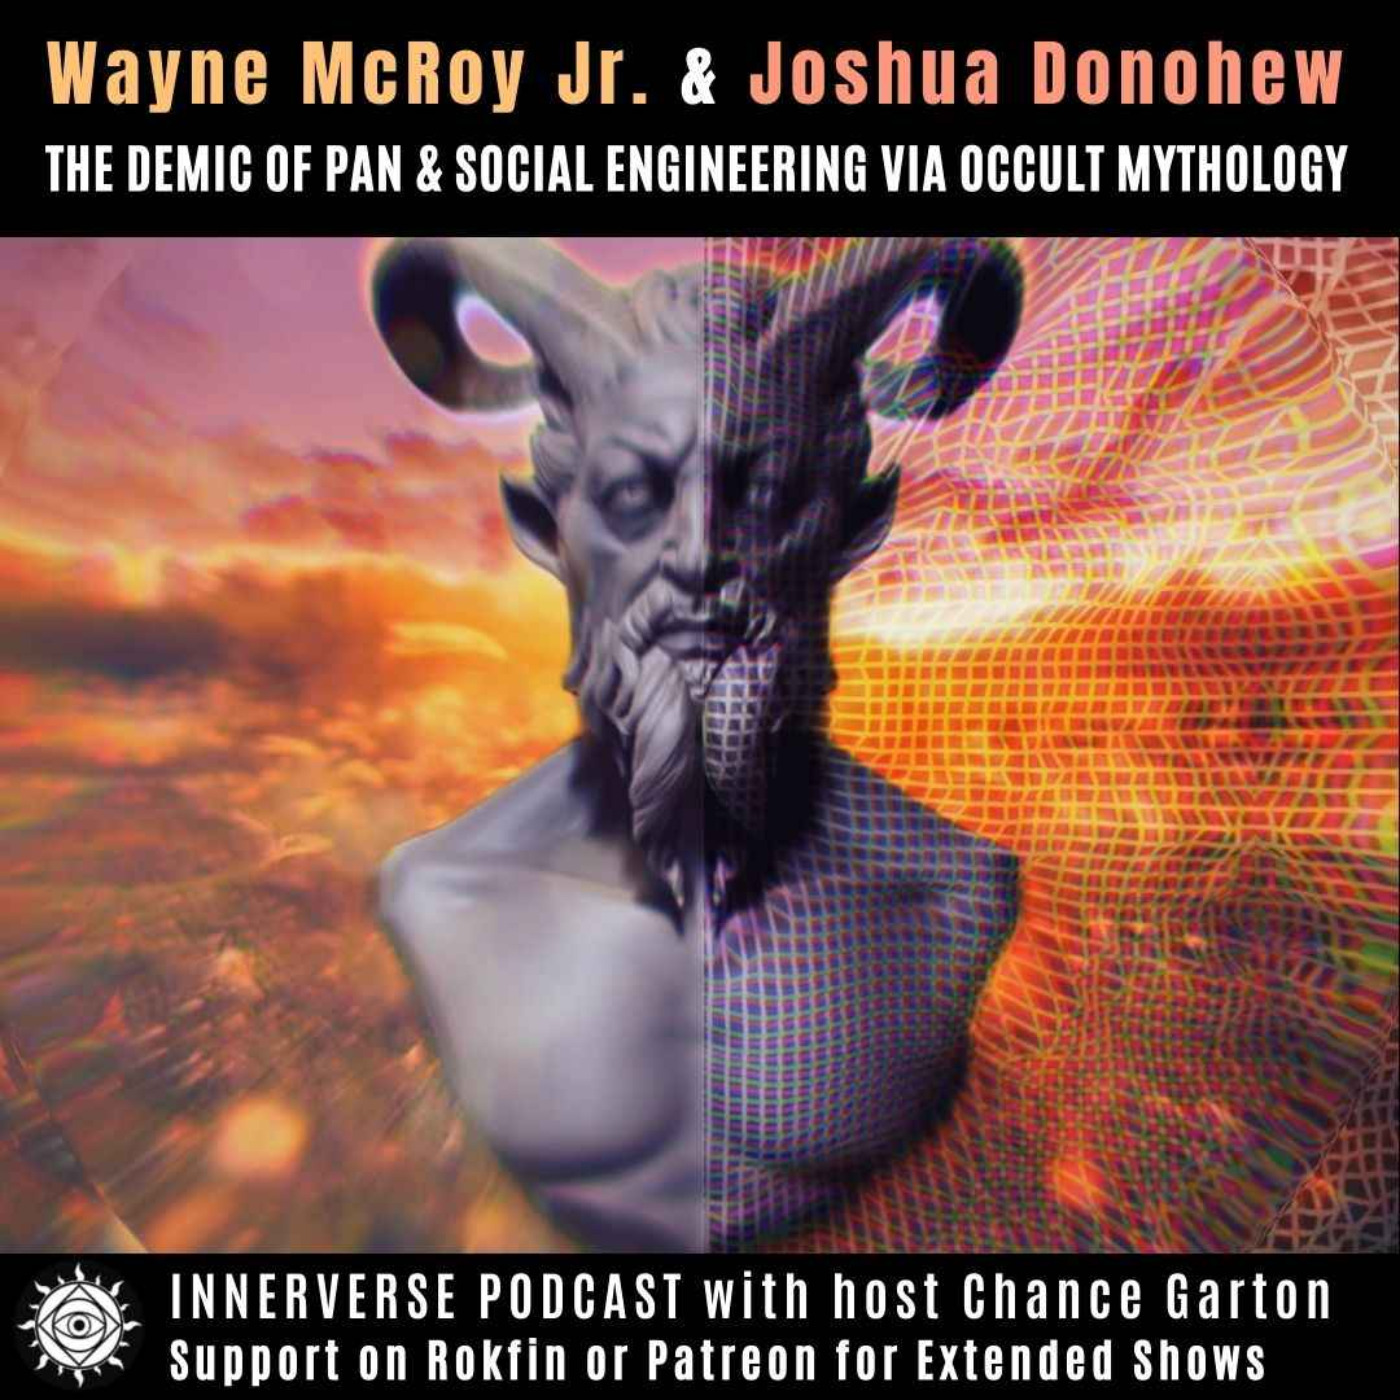 Wayne McRoy Jr. | The Demic of Pan & Social Engineering via Occult Mythology (with Joshua Donohew)